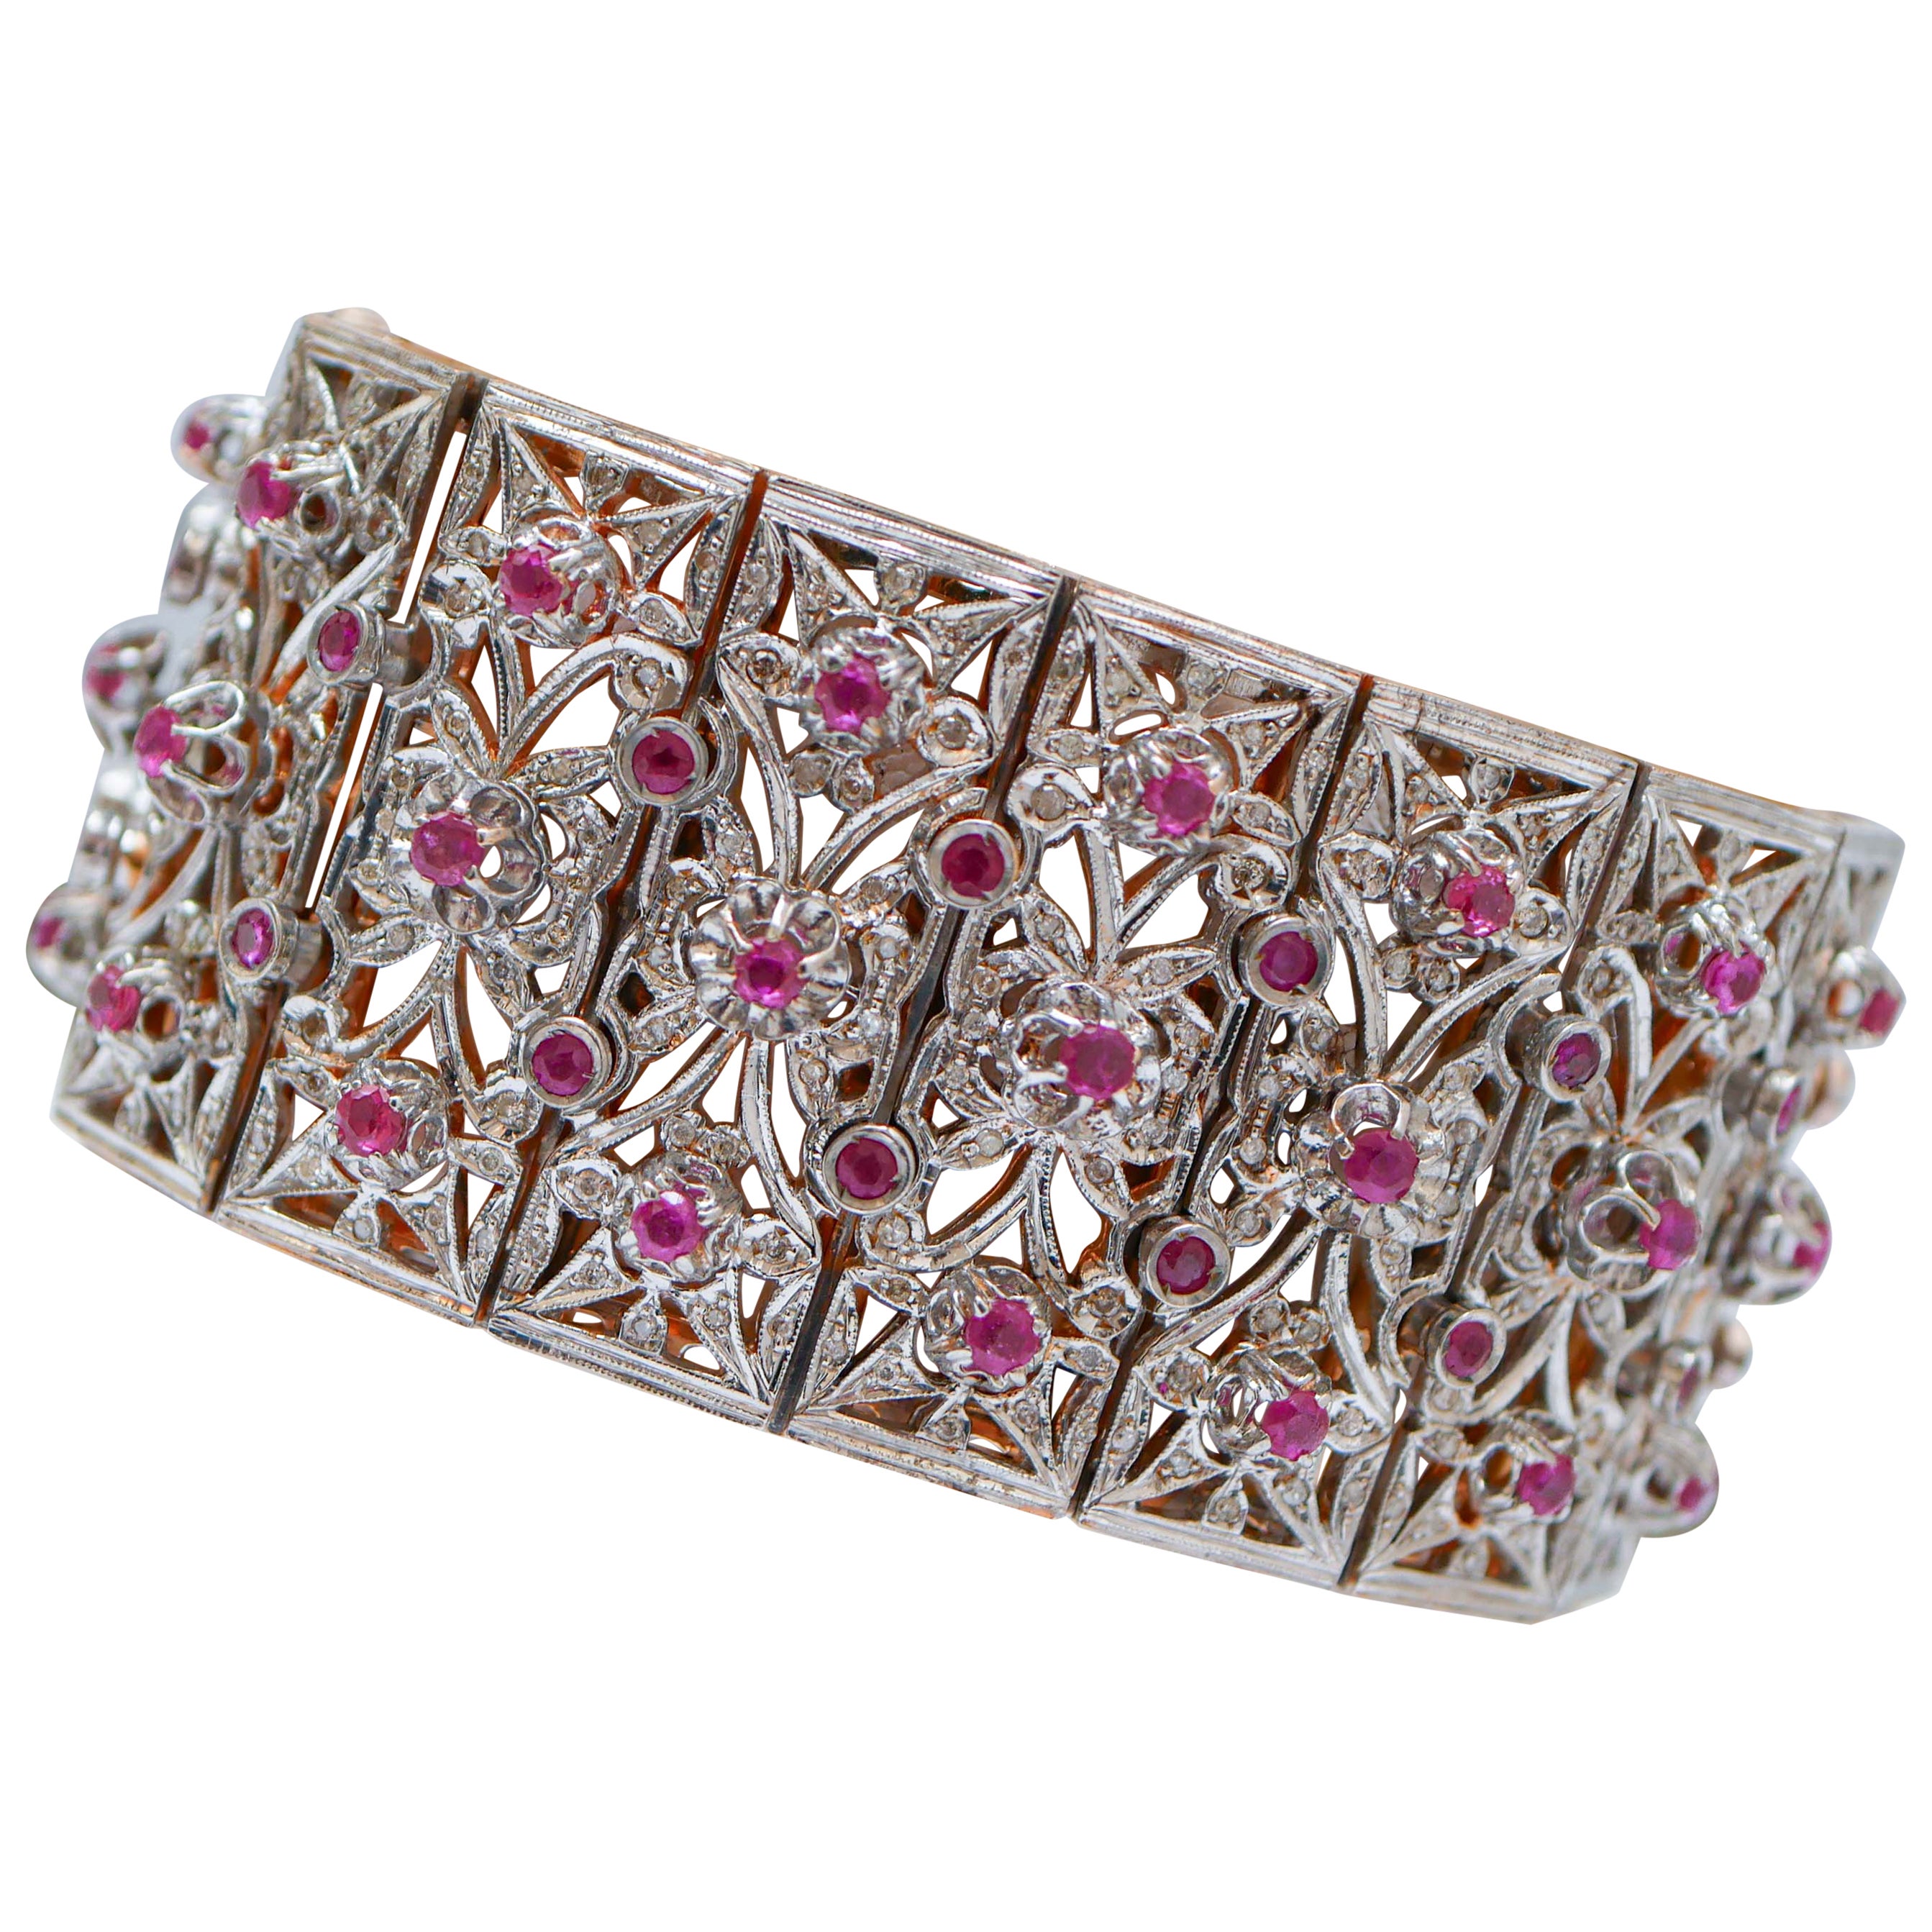 Retrò-Armband aus Rubinen, Diamanten, Roségold und Silber.